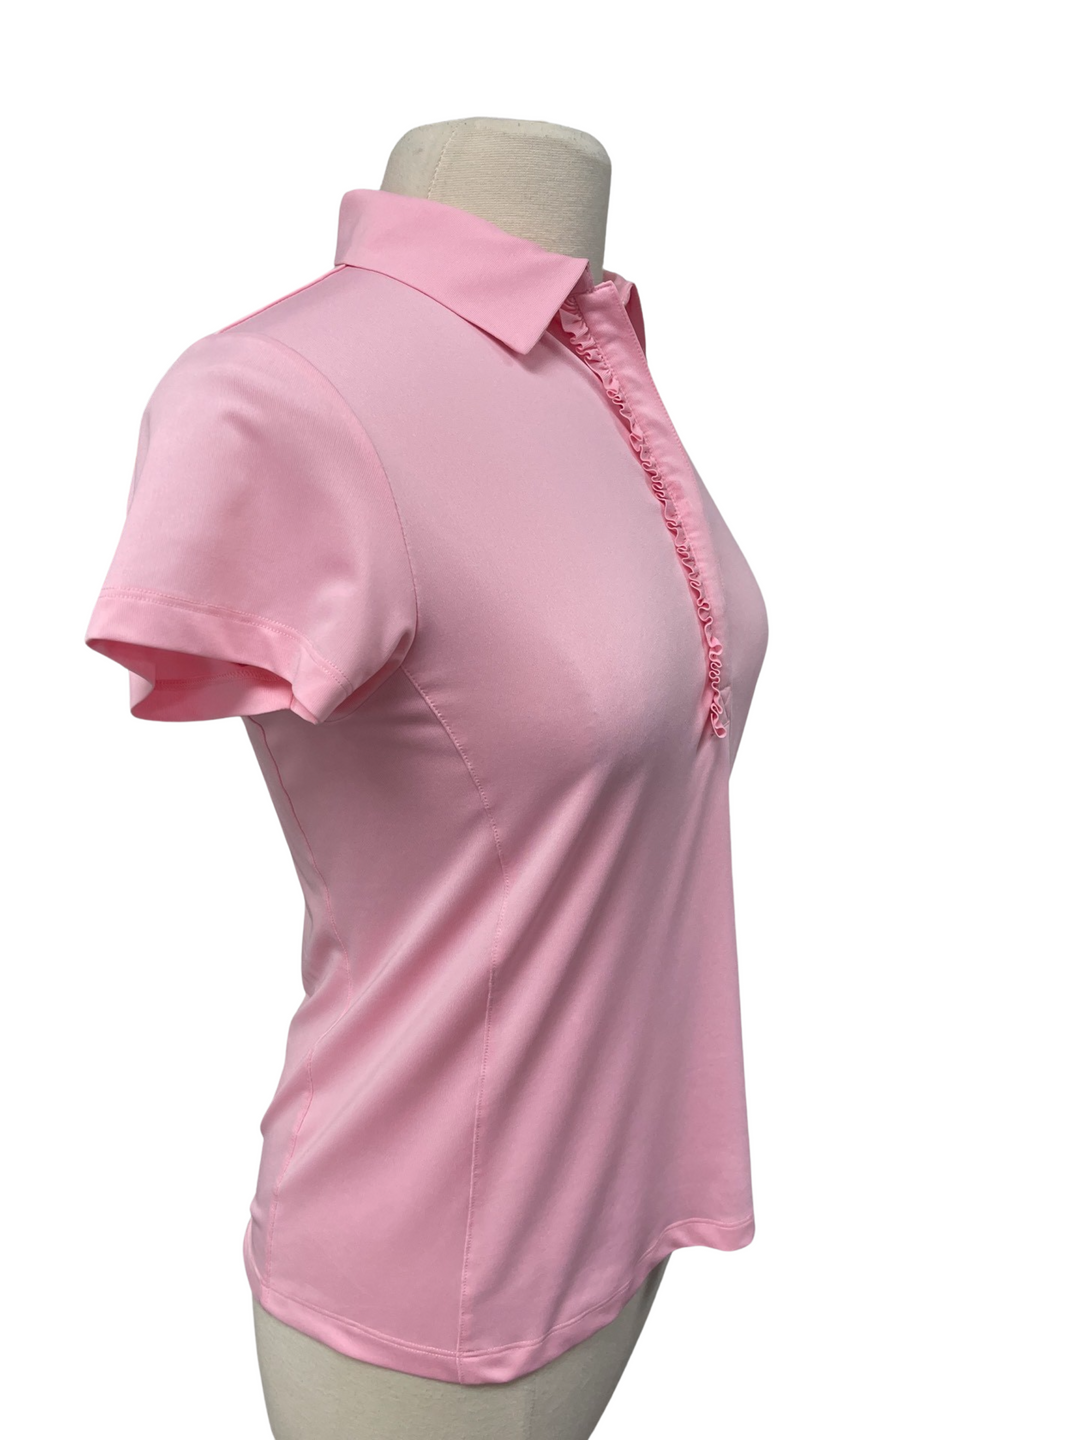 Golftini Light Pink Short Sleeve Ruffle Polo- Medium